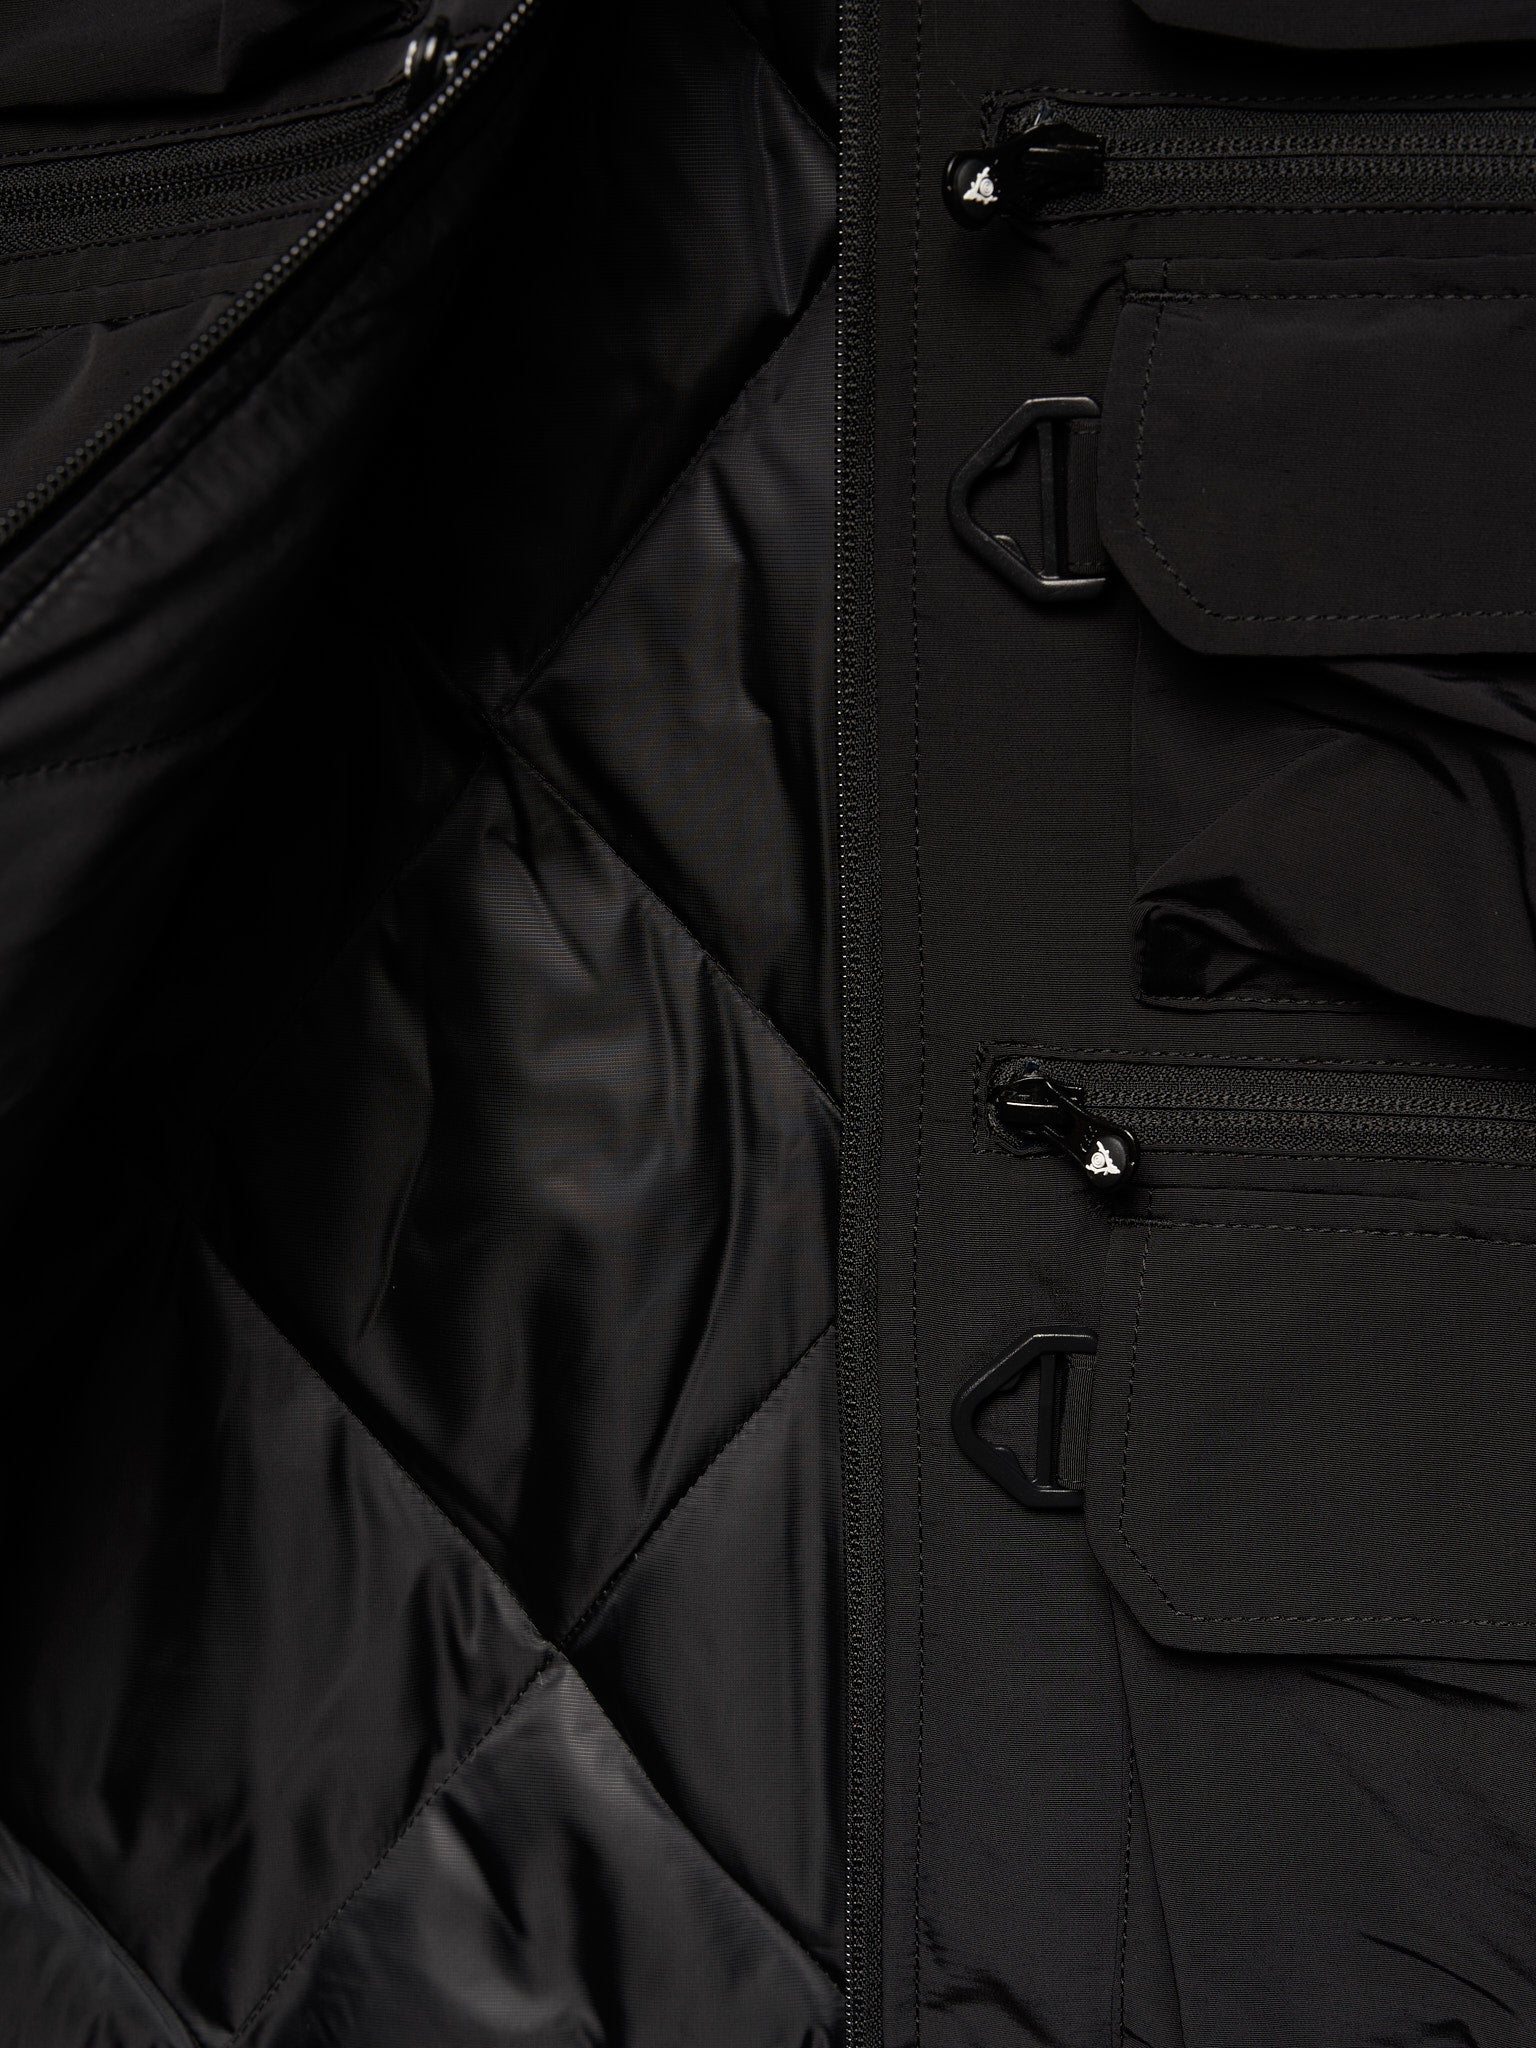 SOUTH2 WEST8 Multi-Pocket Zipped Jacket